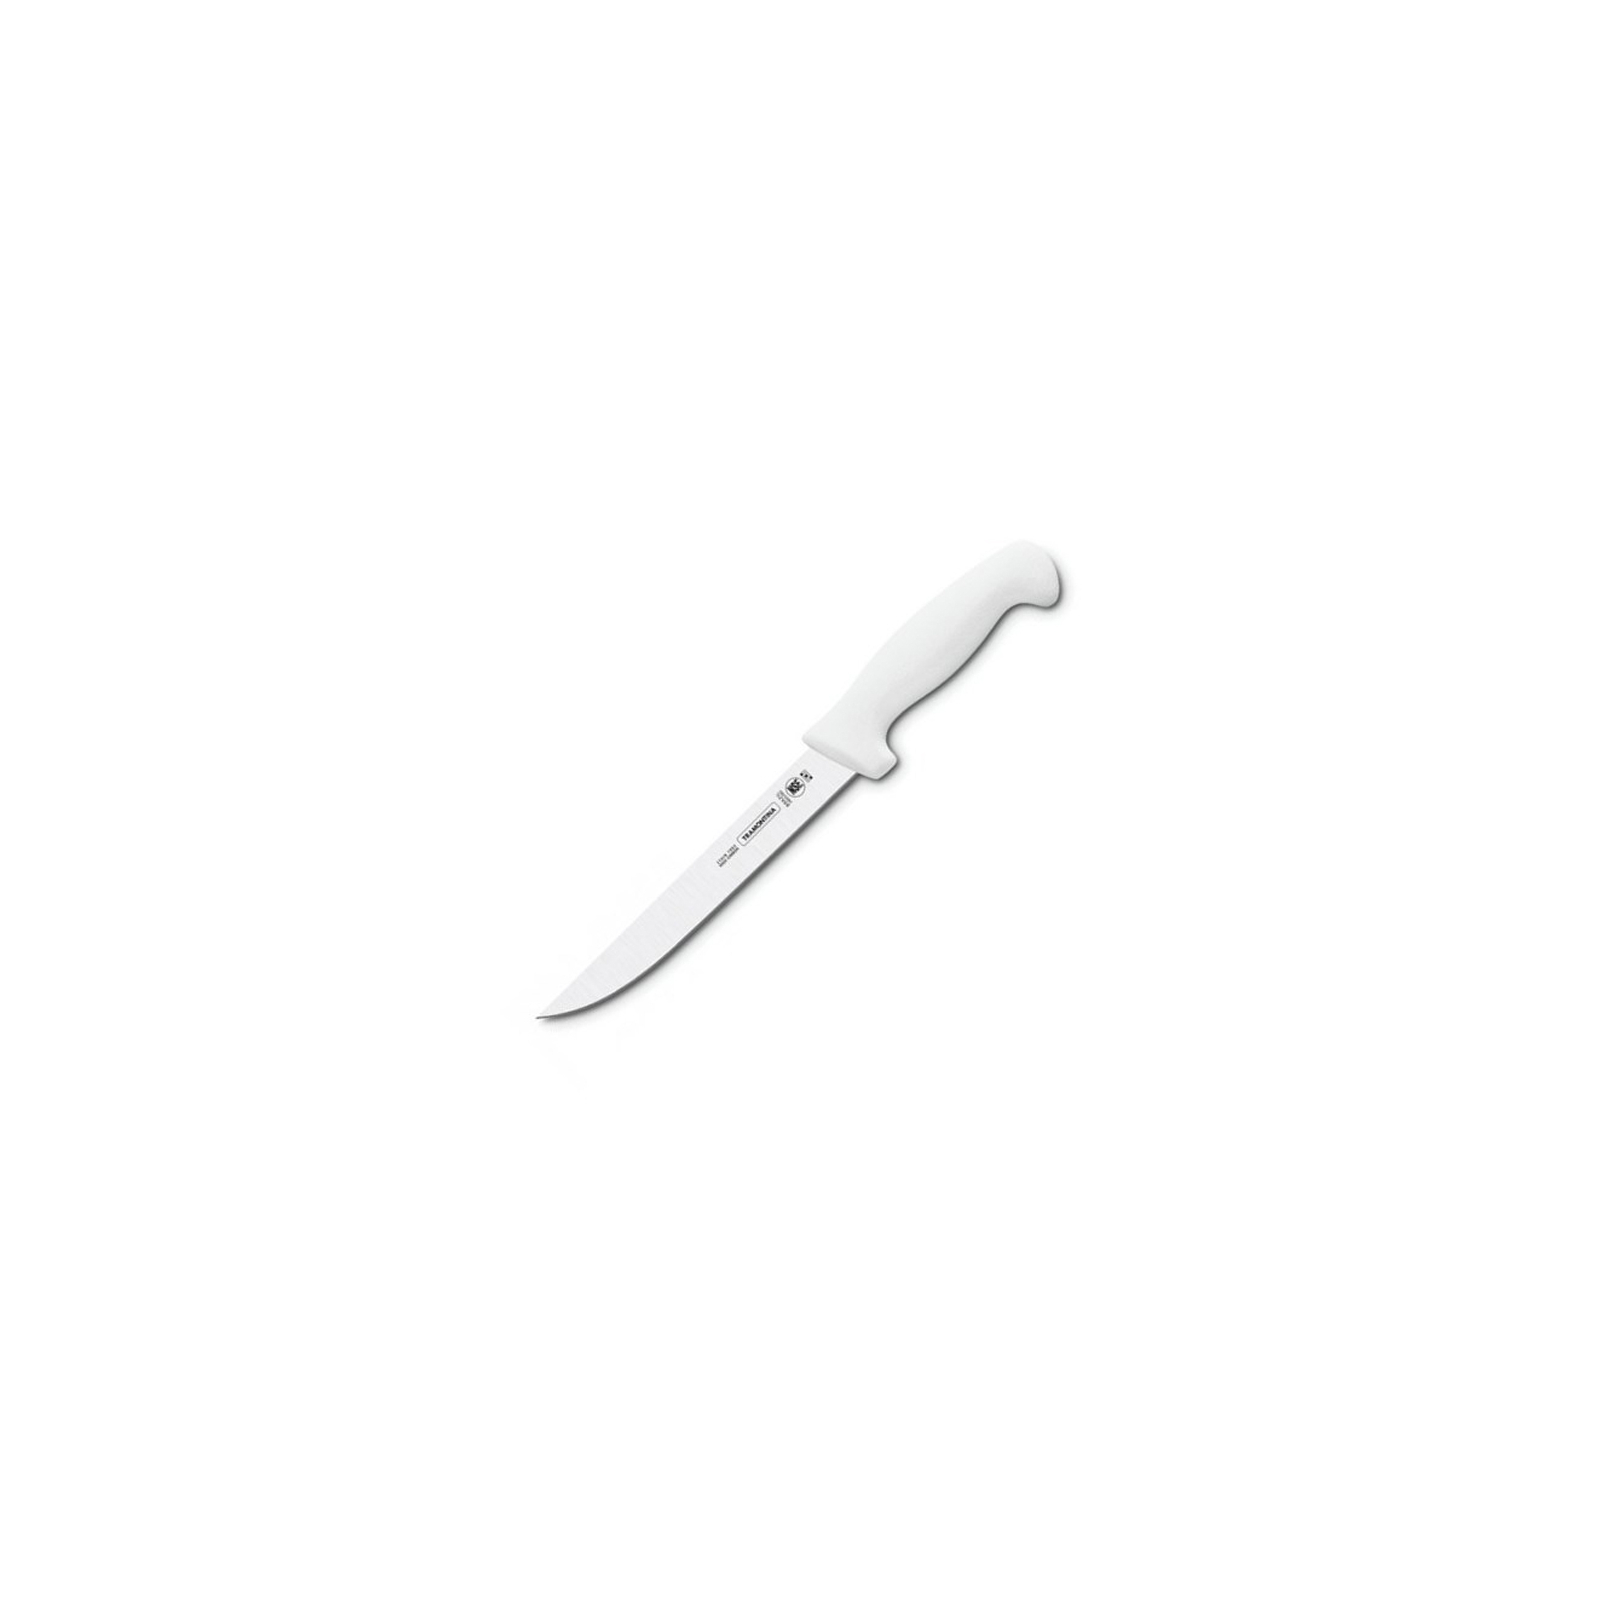 Кухонный нож Tramontina Professional Master обвалочный 152 мм White (24605/086)